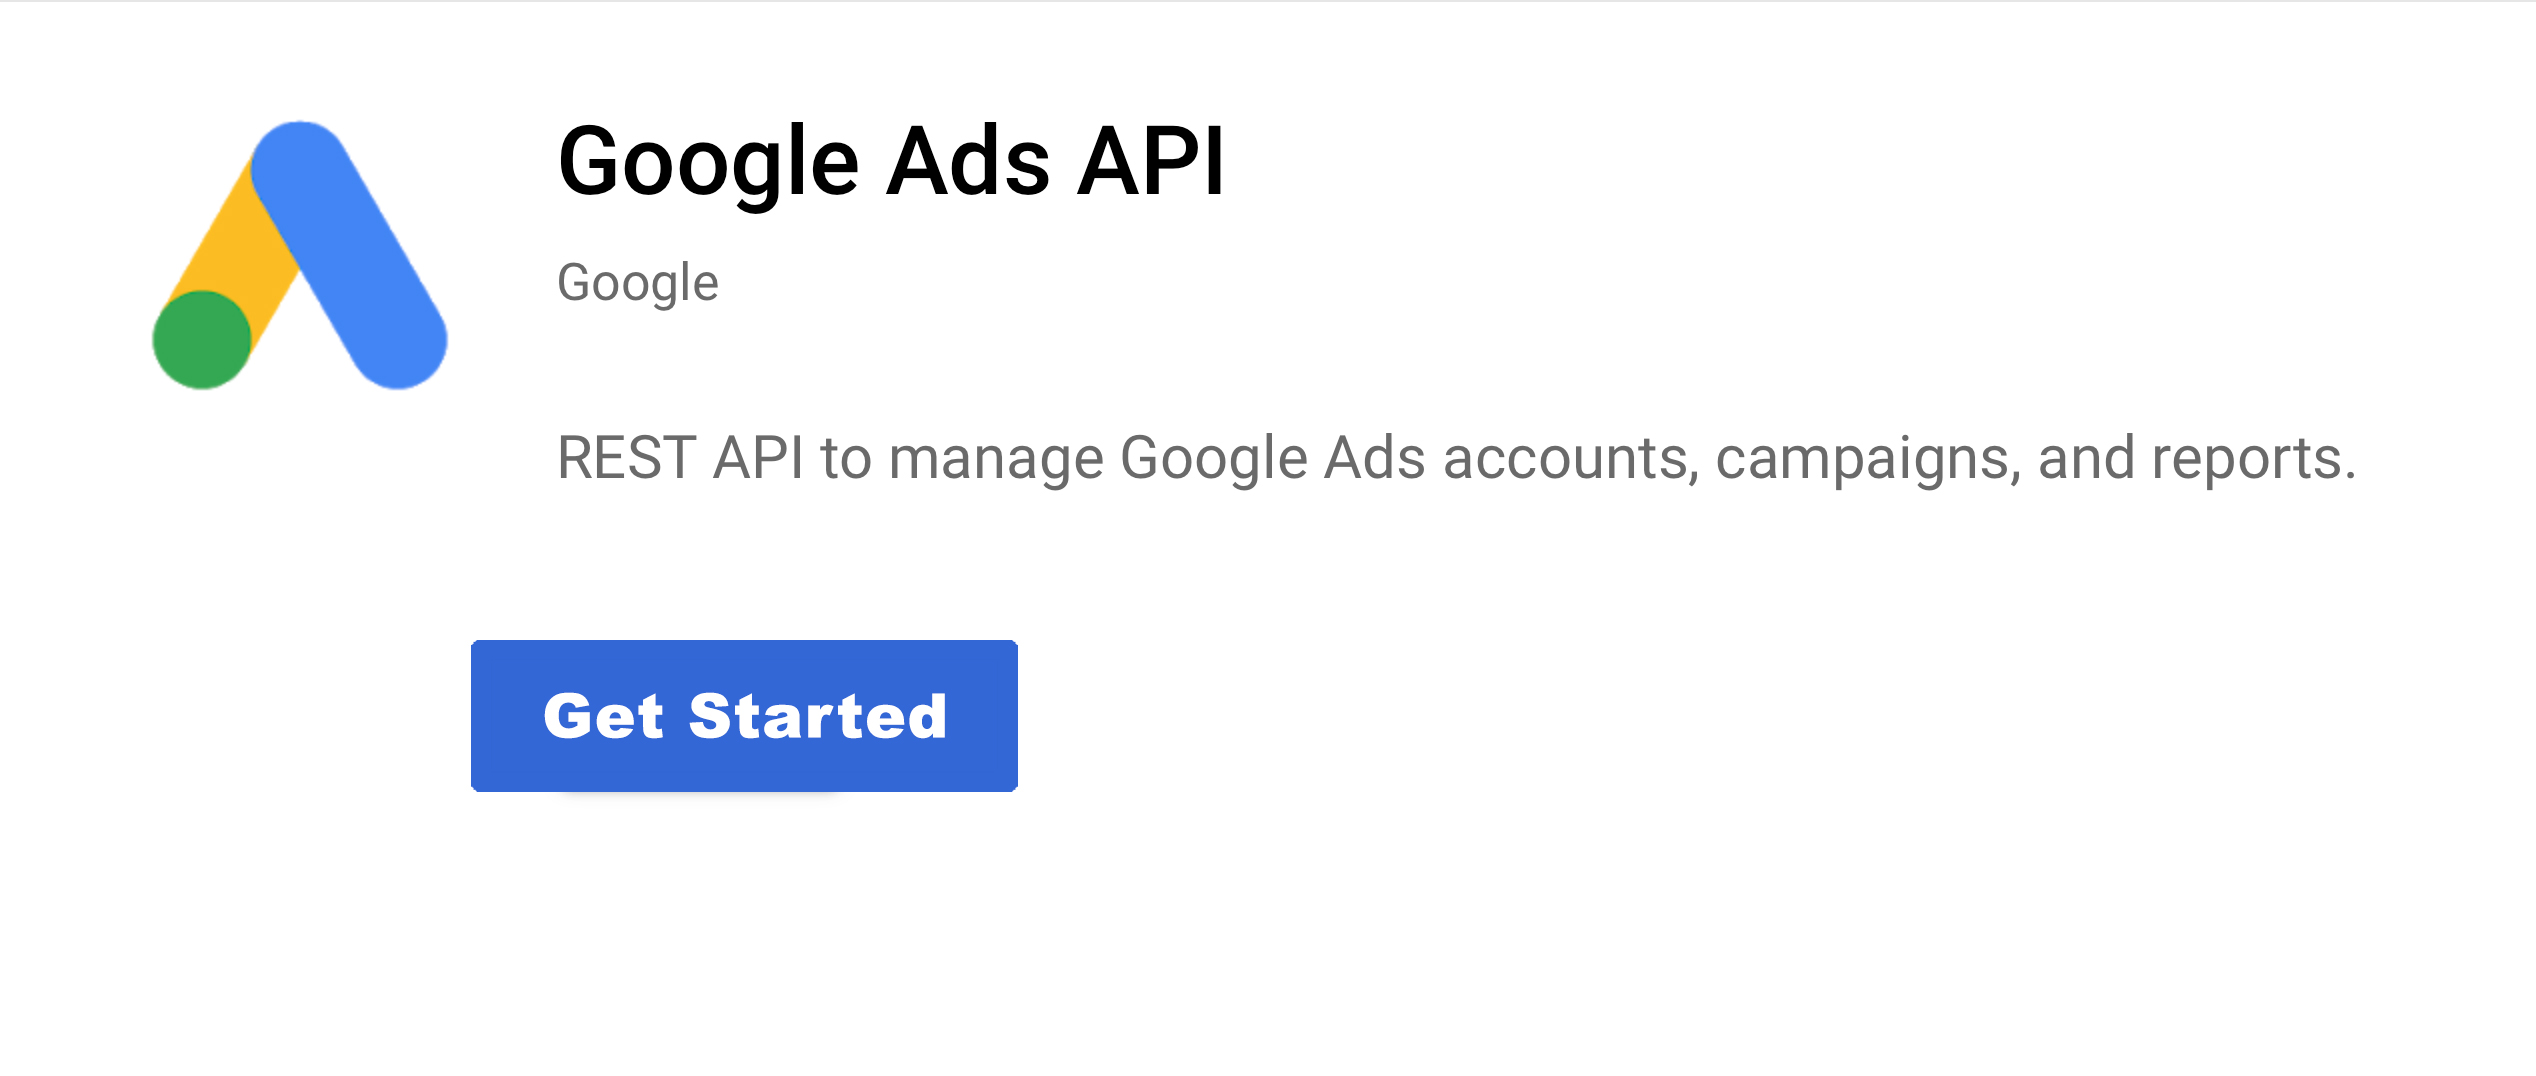 Google-Ads-API-AdWord-API-Get-Started